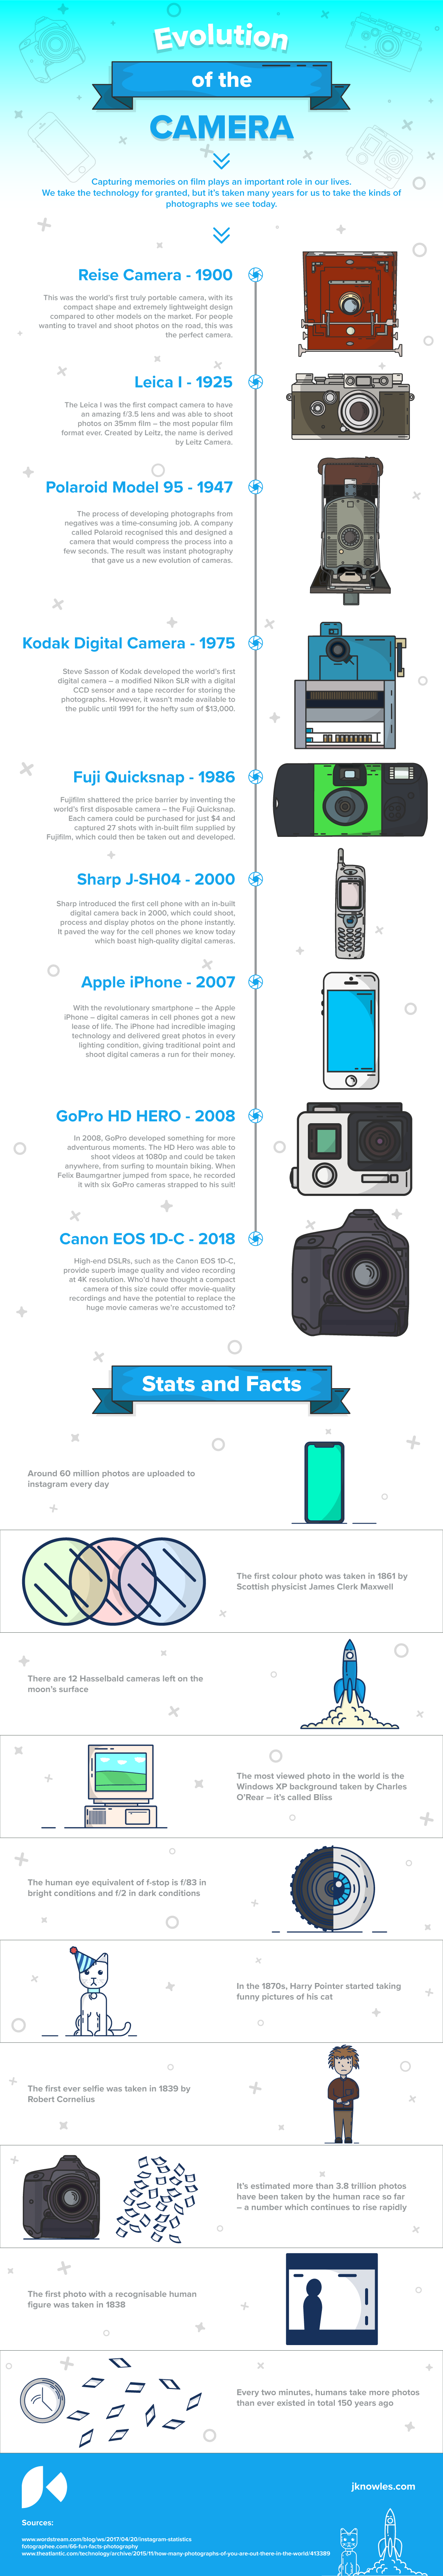 Evolution-of-the-camera